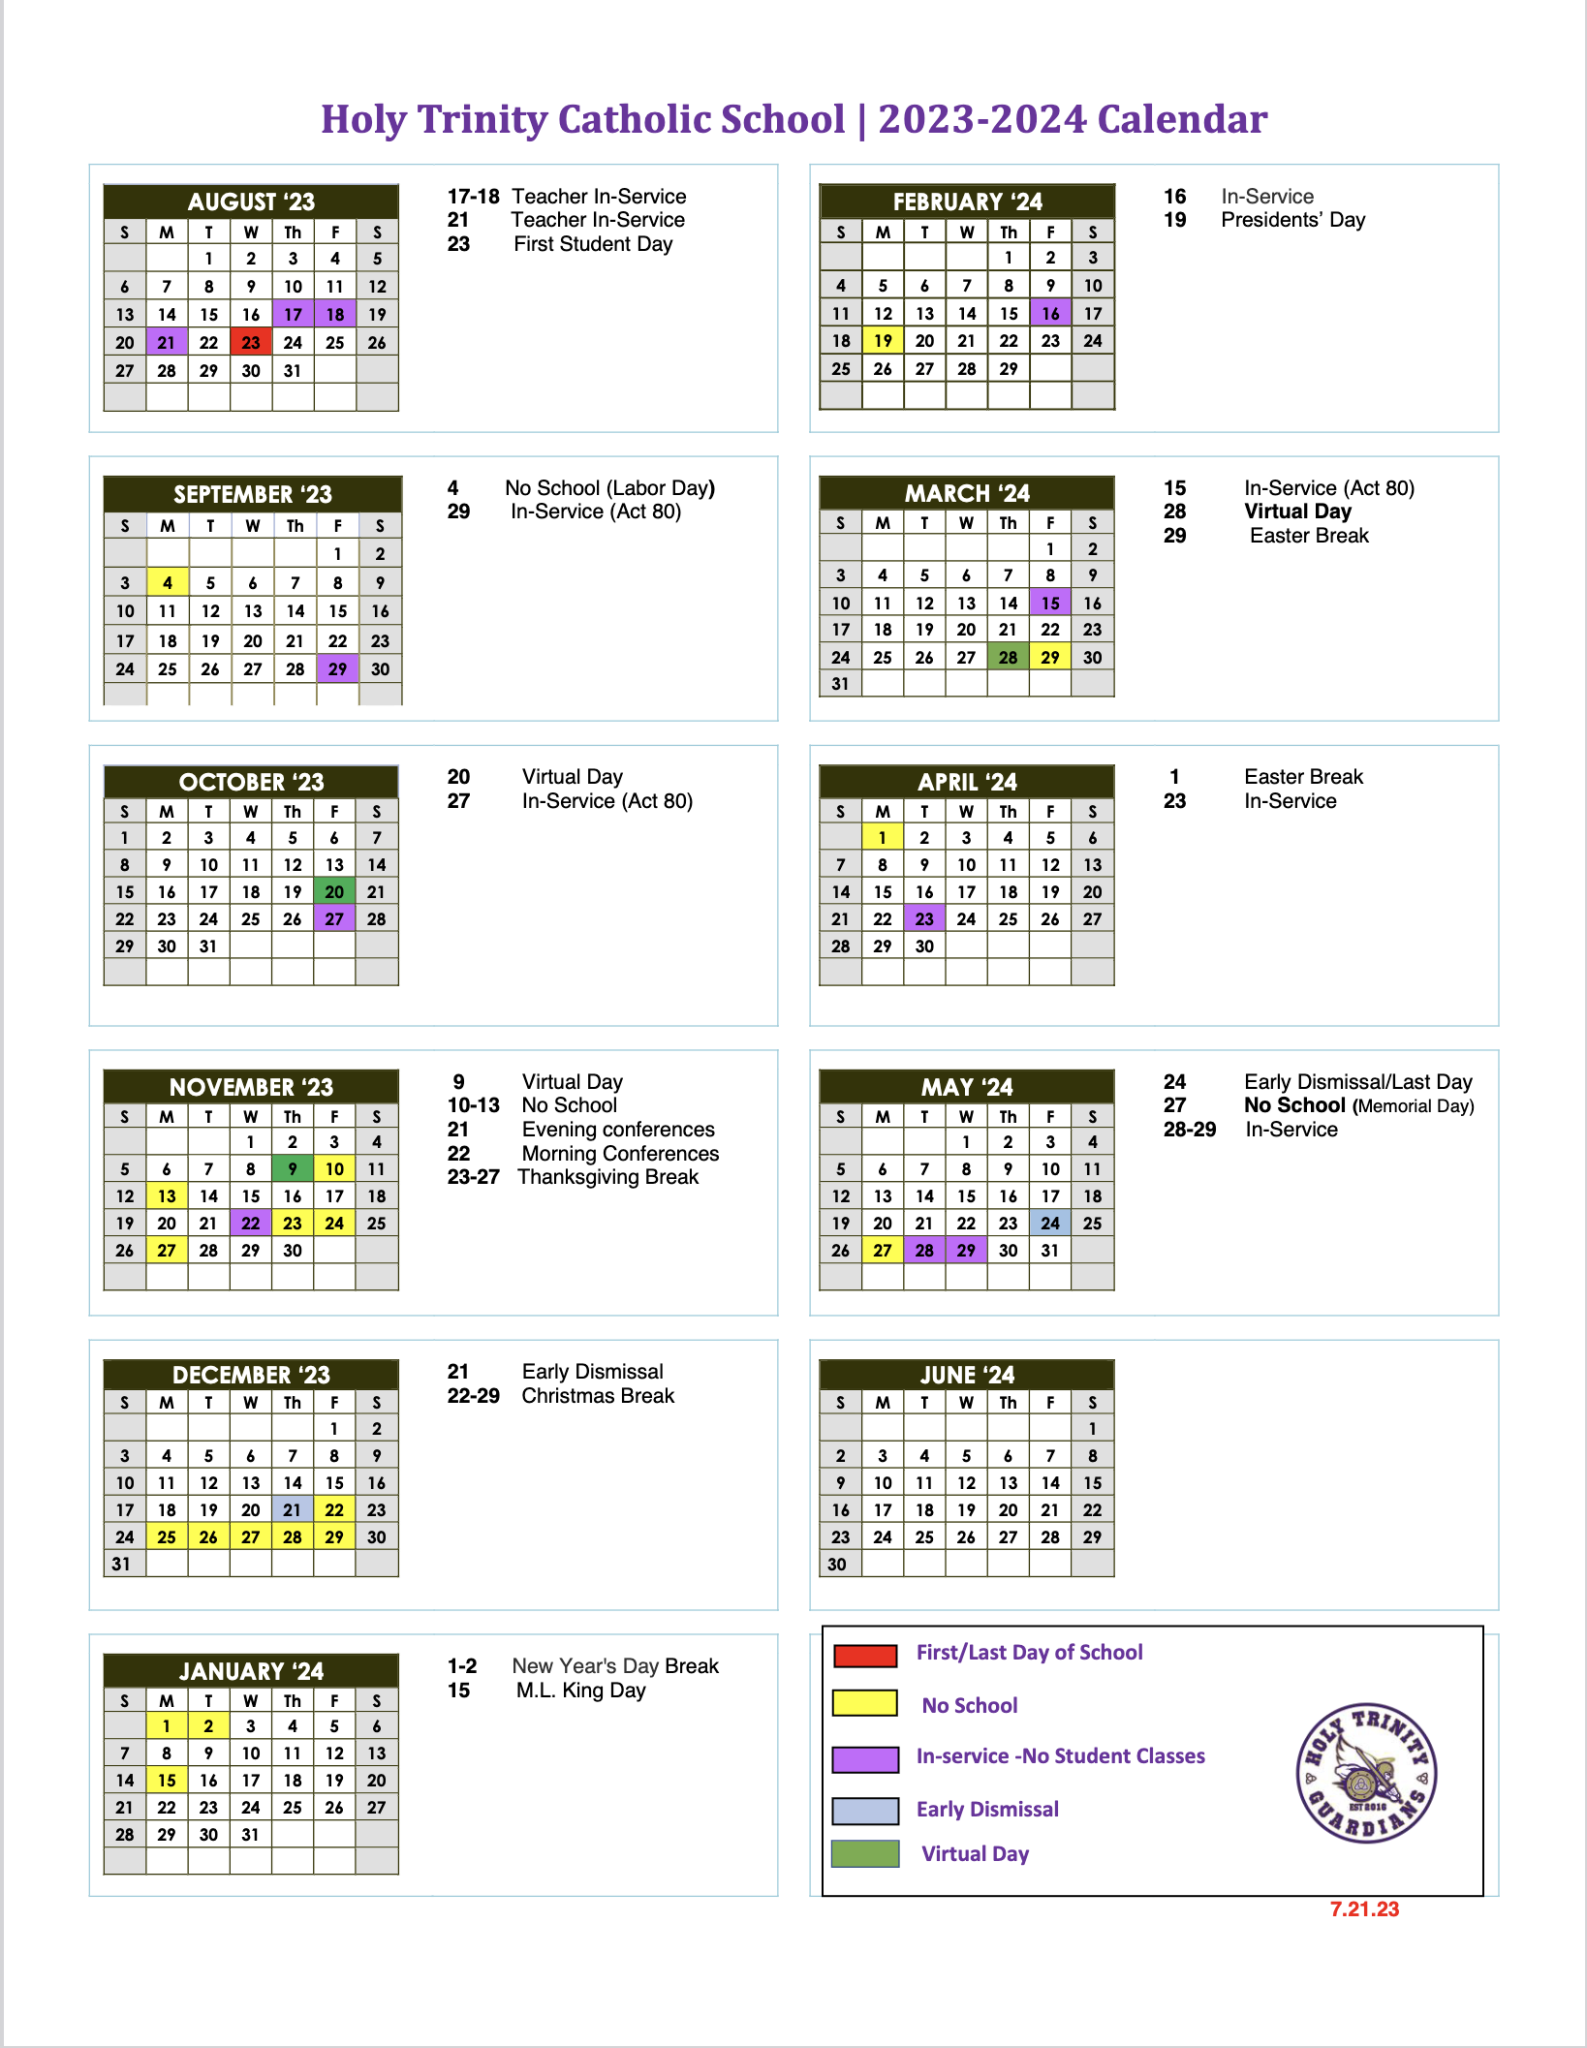 Academic Calendar 20232024 Holy Trinity Catholic School, Altoona PA